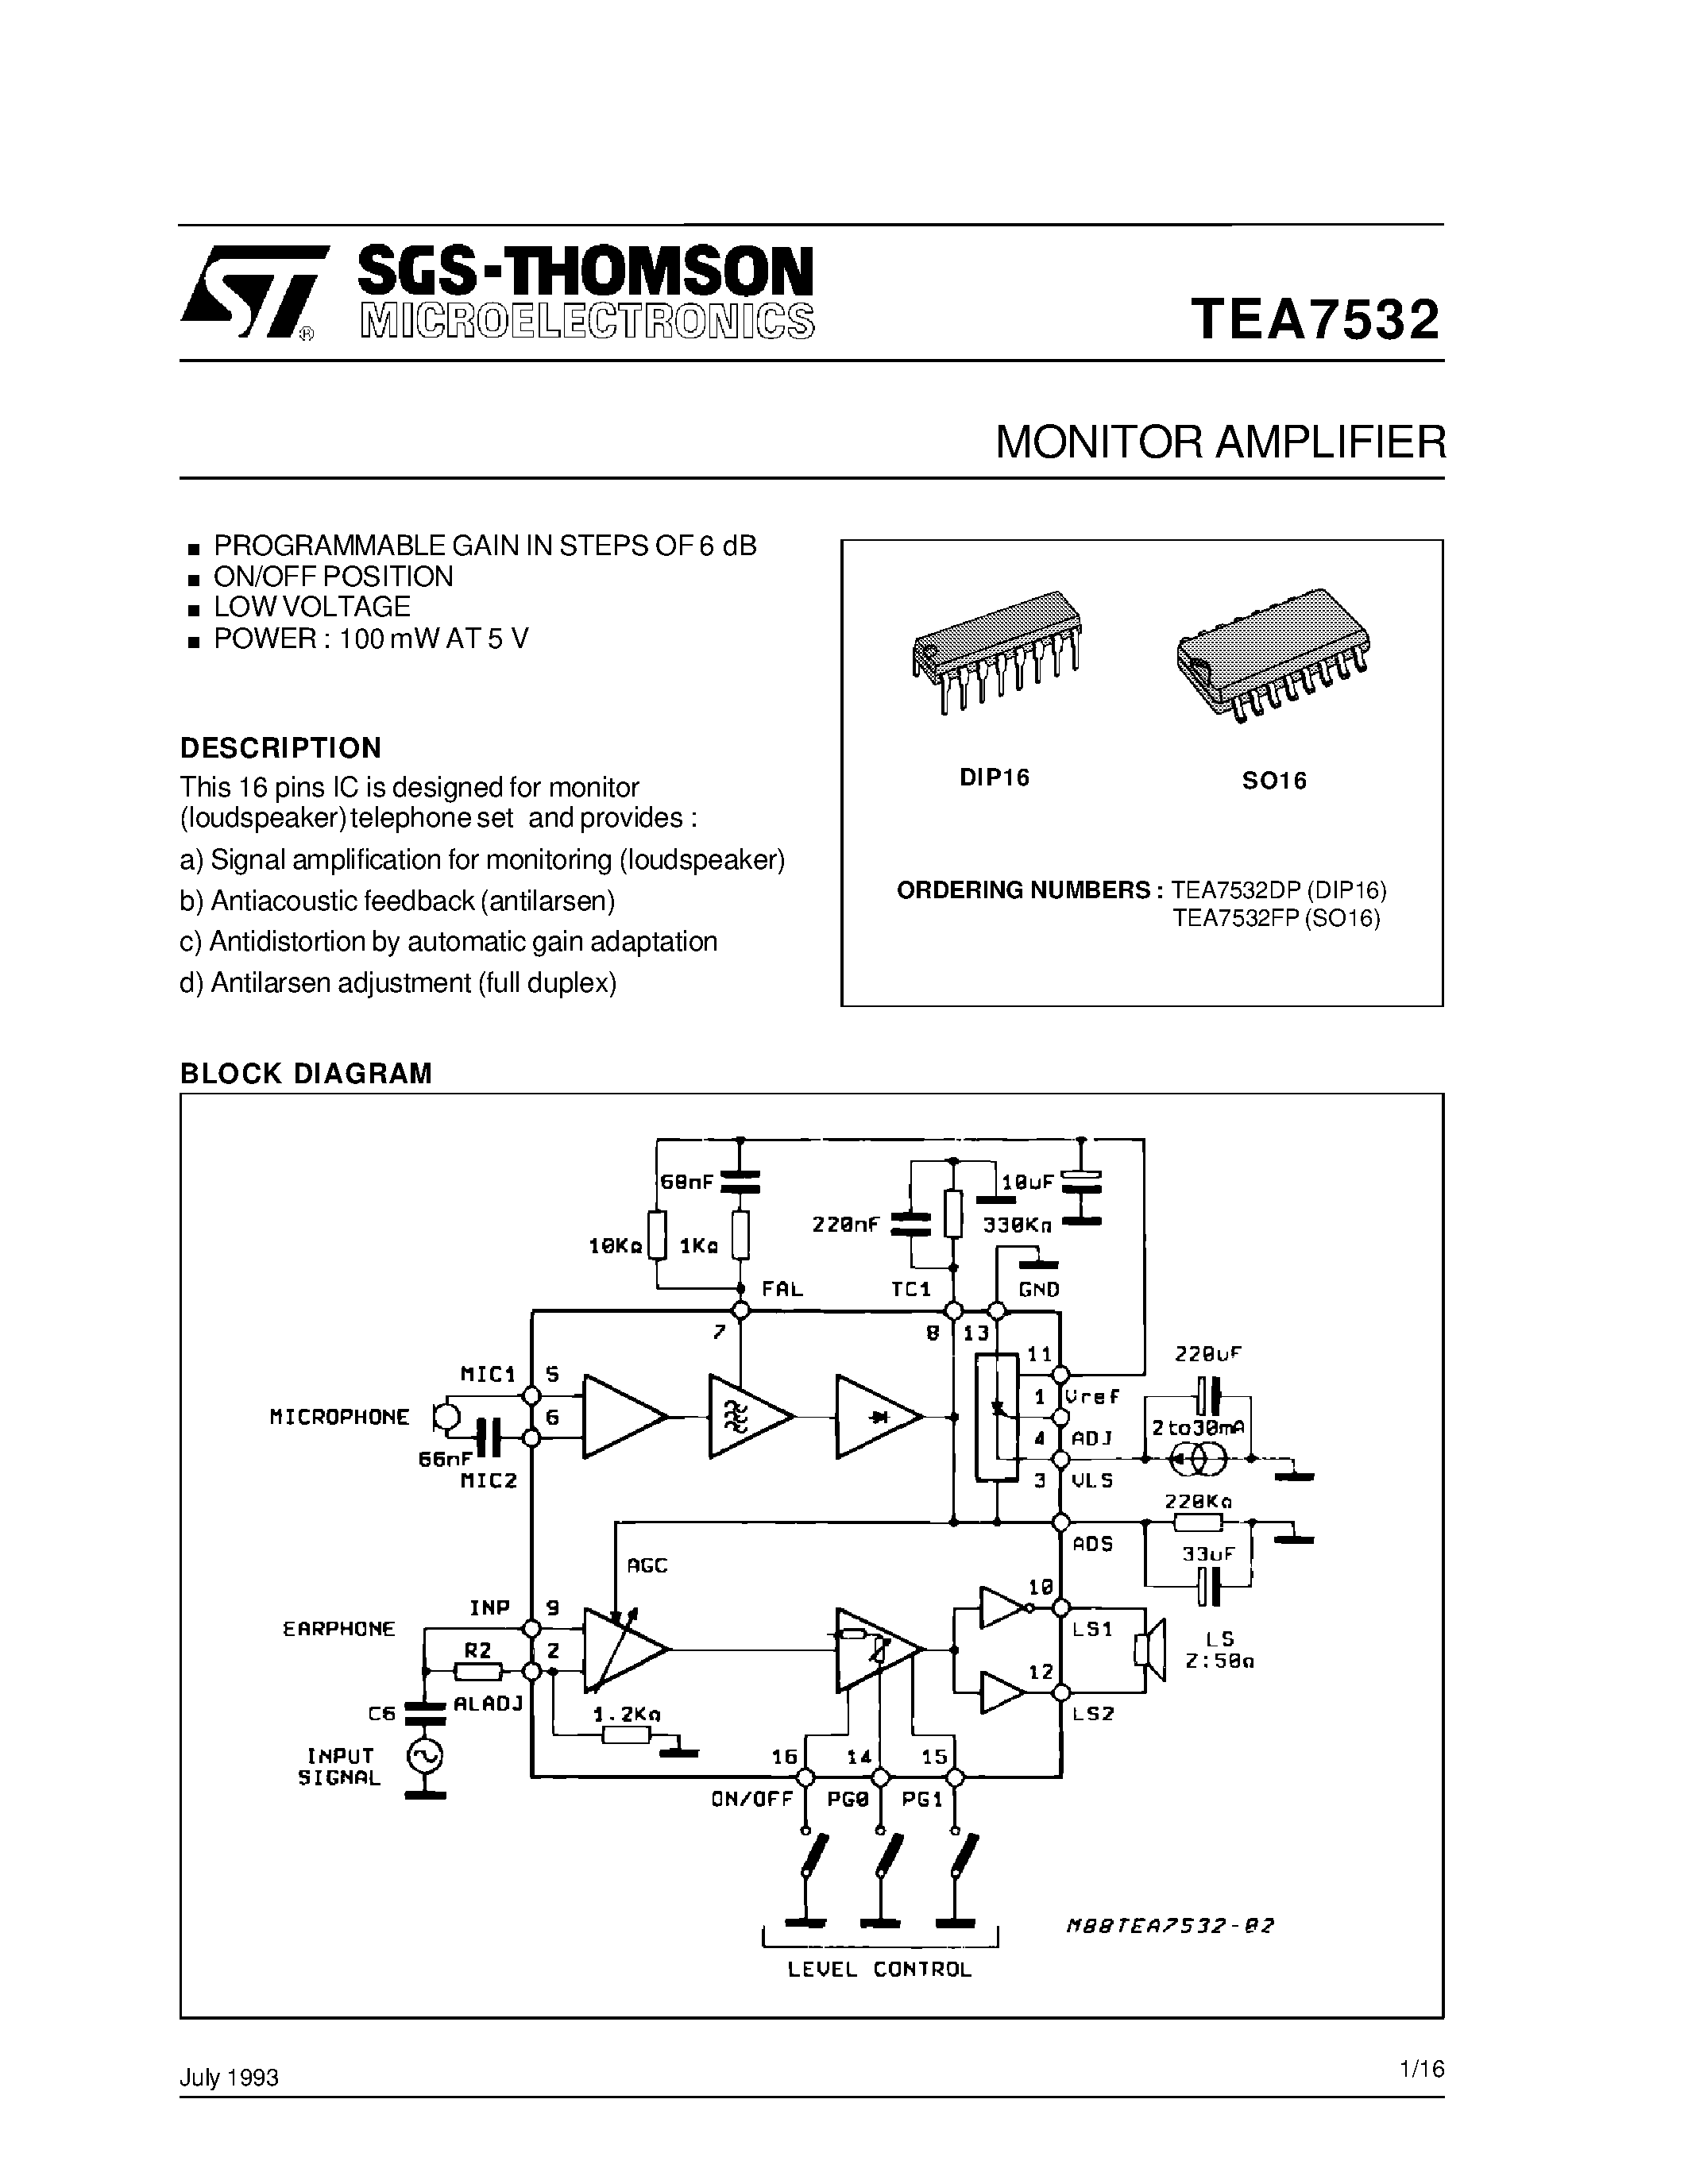 Datasheet TEA7532 - MONITOR AMPLIFIER page 1